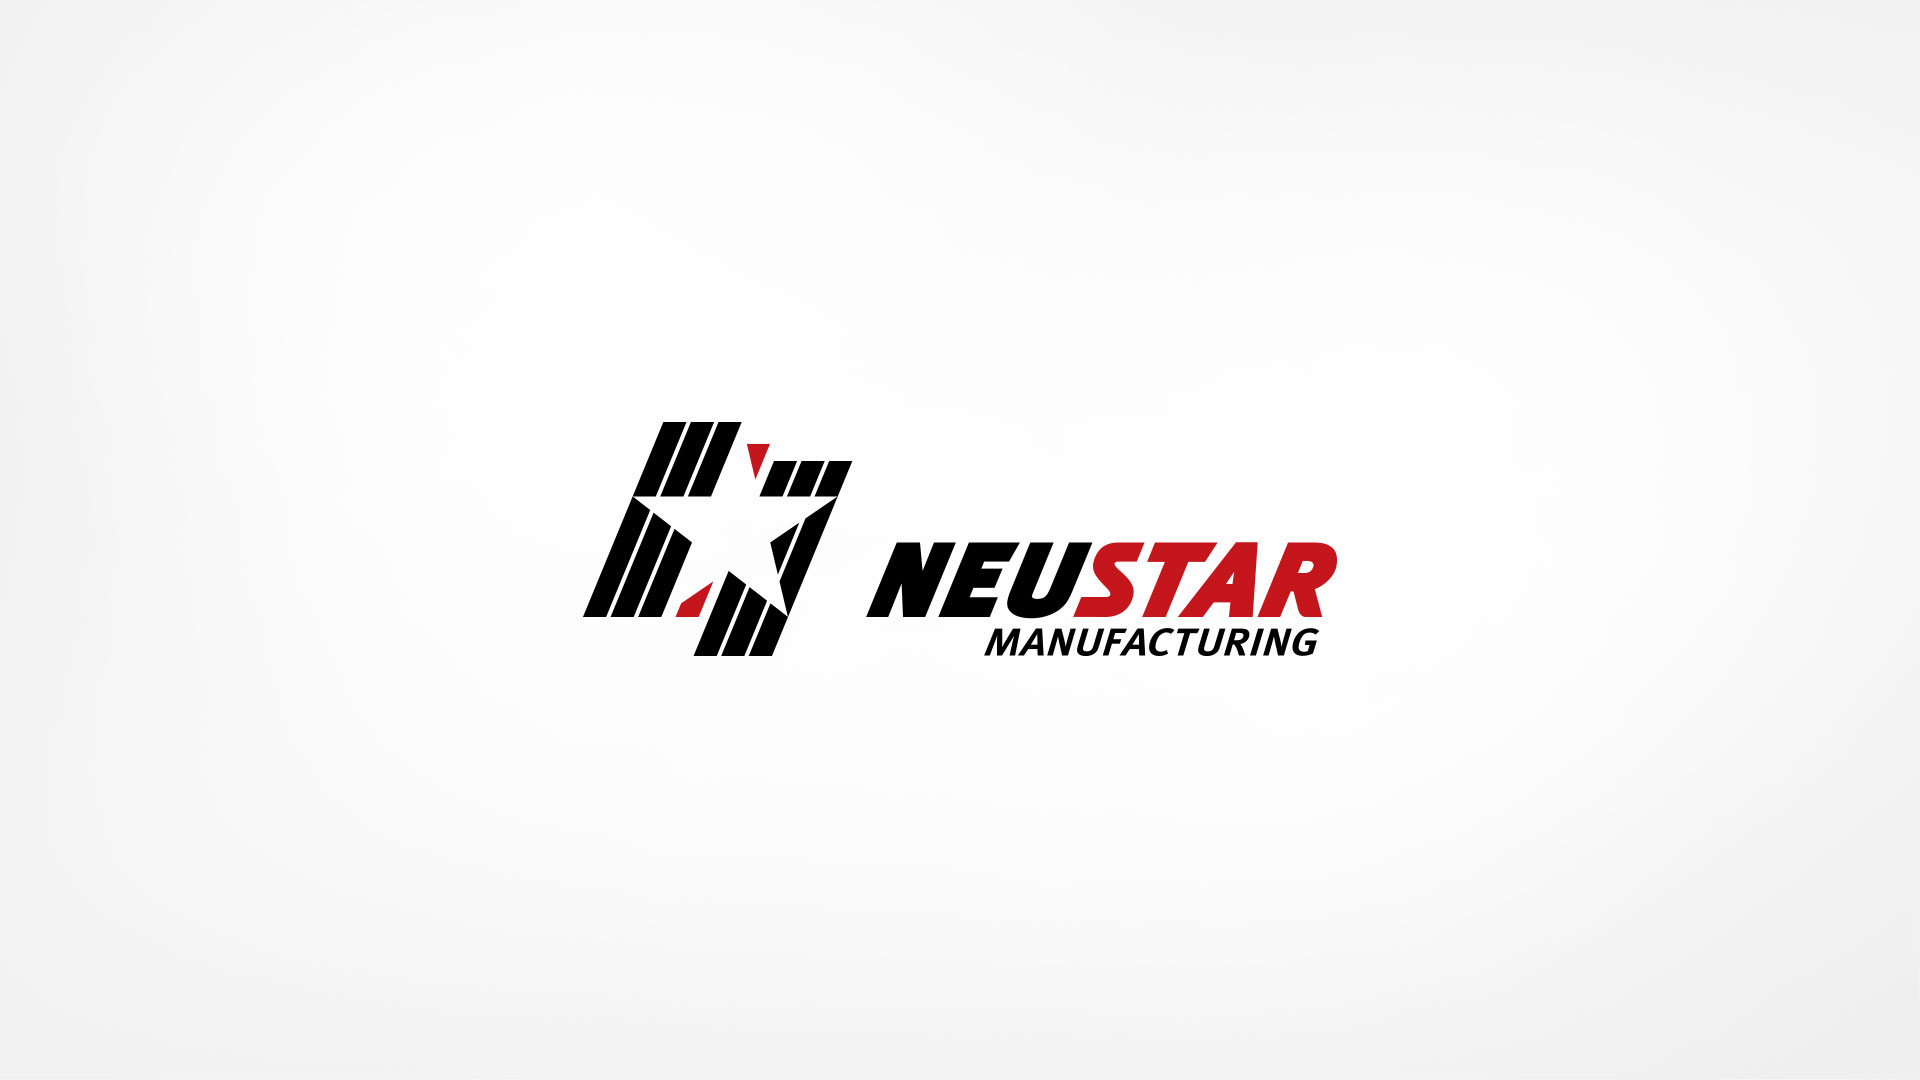 NeuStar Manufacturing